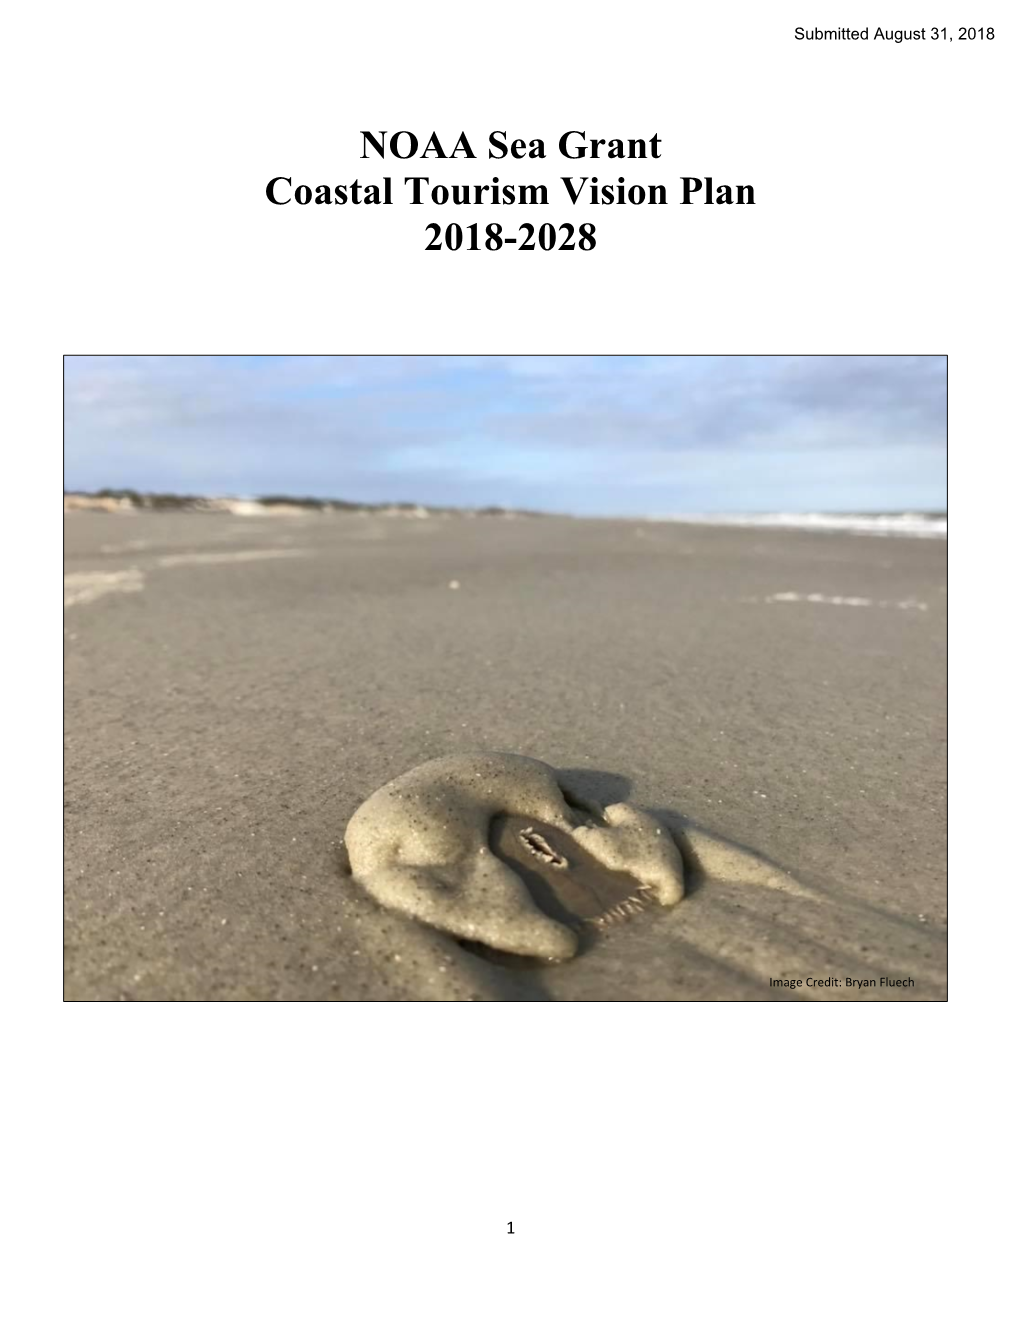 Coastal Tourism Vision Plan 2018-2028